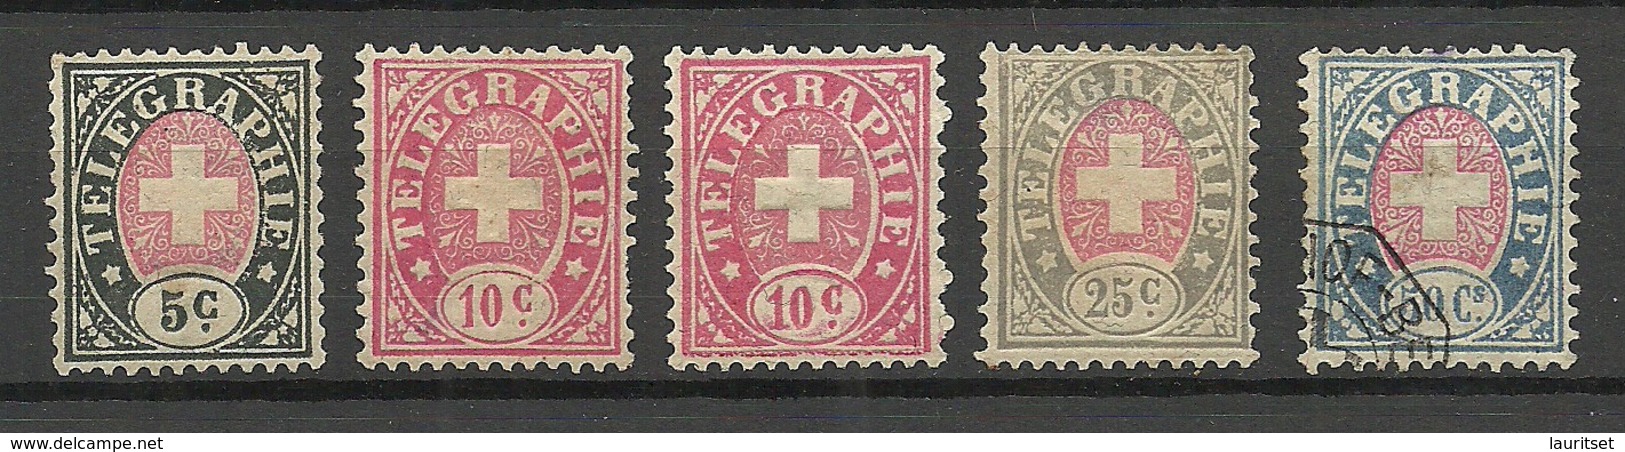 SCHWEIZ Switzerland 1881 Telegraphe Telefraphenmarken, Mint & Used NB! - Telegraph